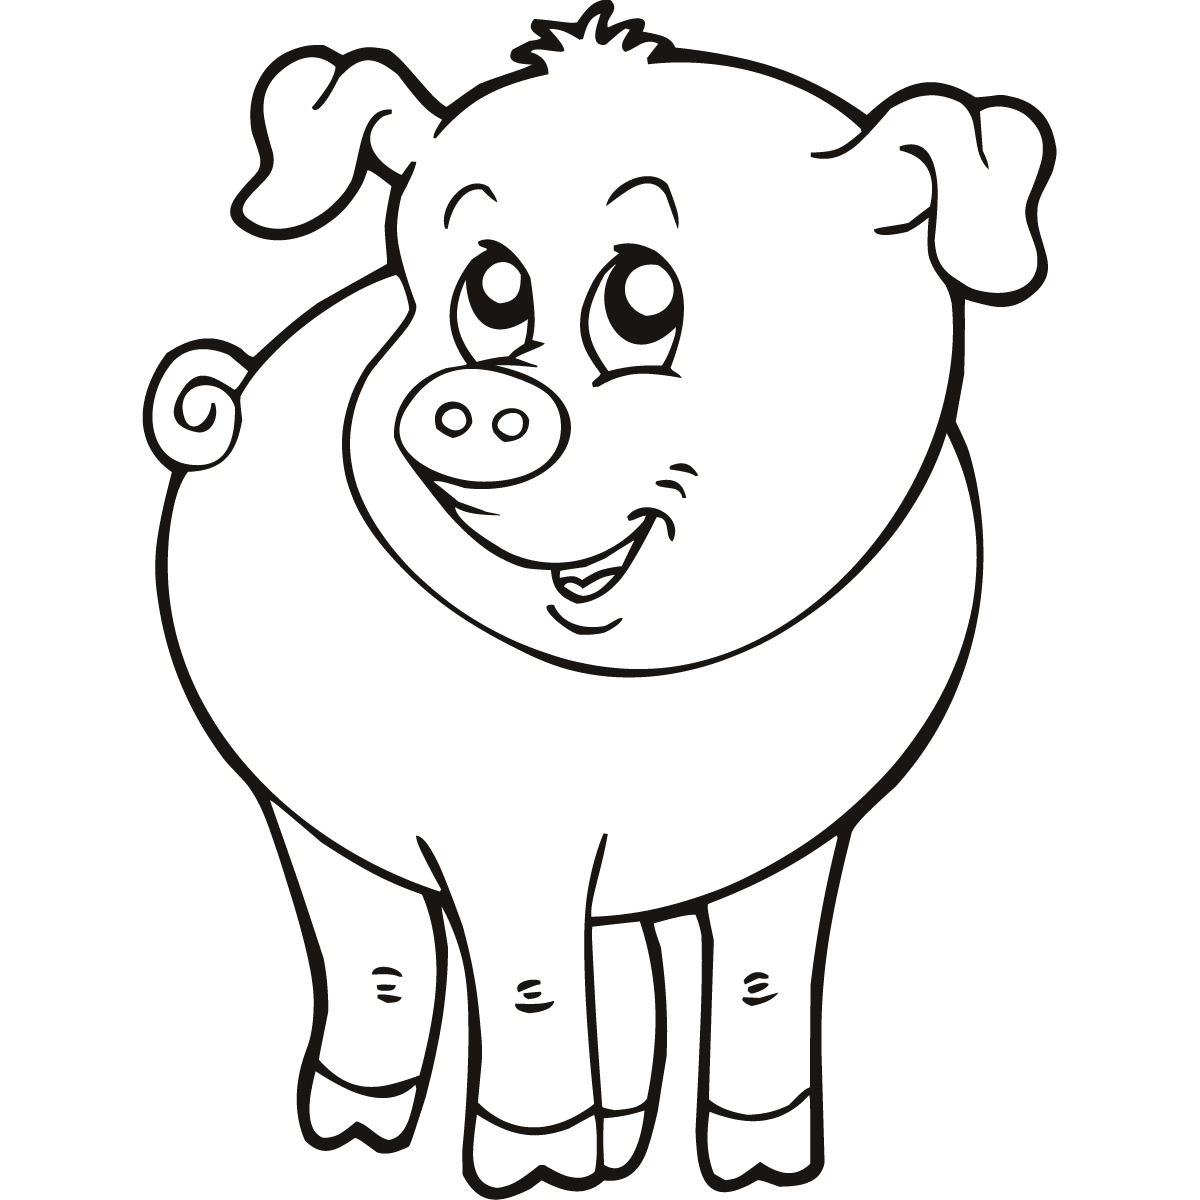 Free Farm Animal Drawings, Download Free Farm Animal Drawings png